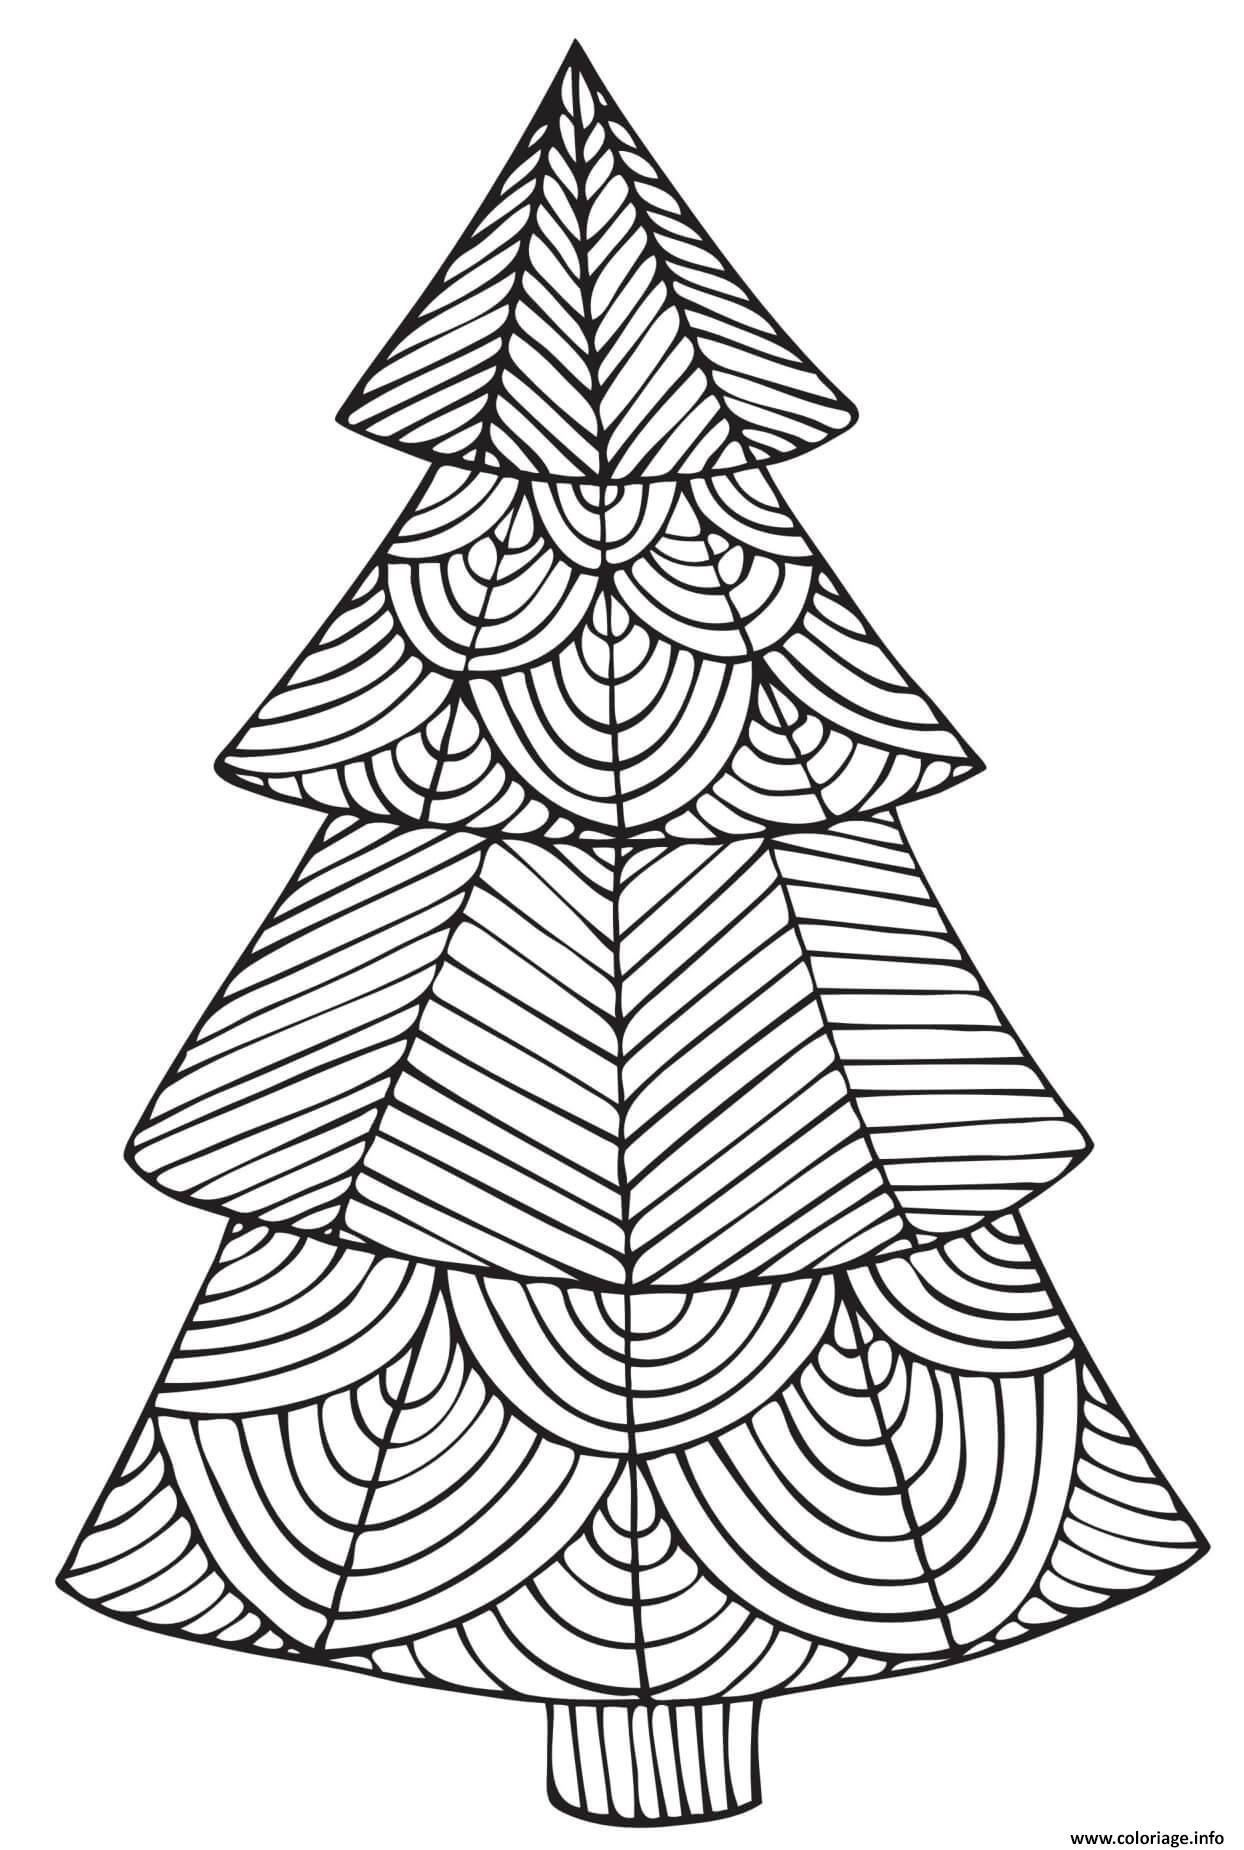 Coloriage Noel Mandala Geometric Sapin Dessin Noel Adulte à imprimer